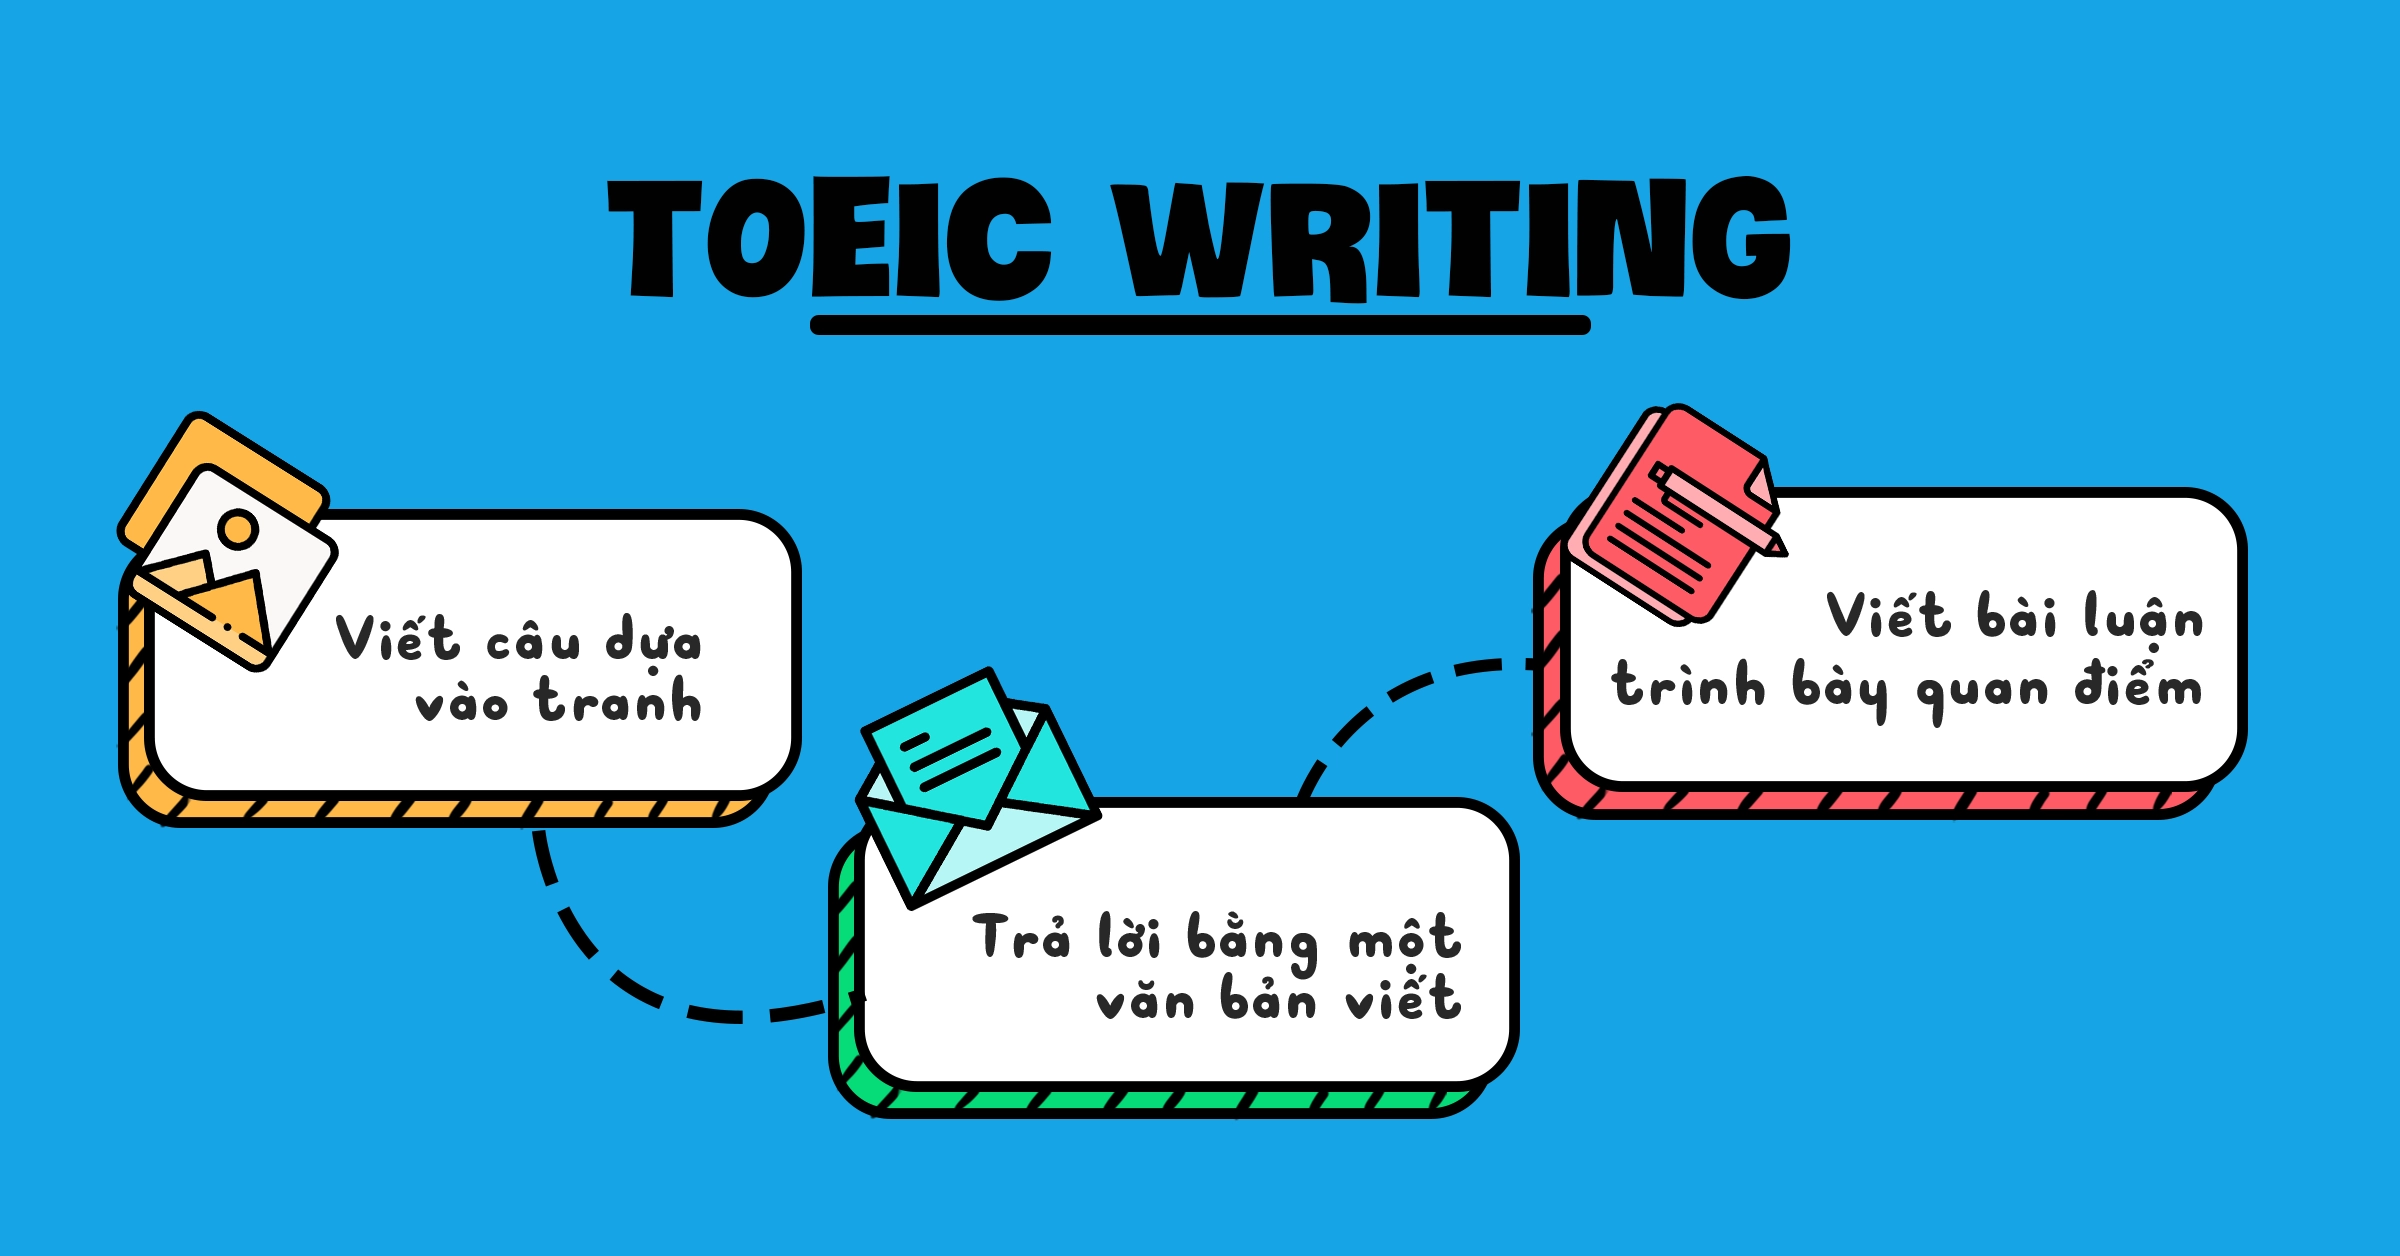 toeic-writing-la-gi